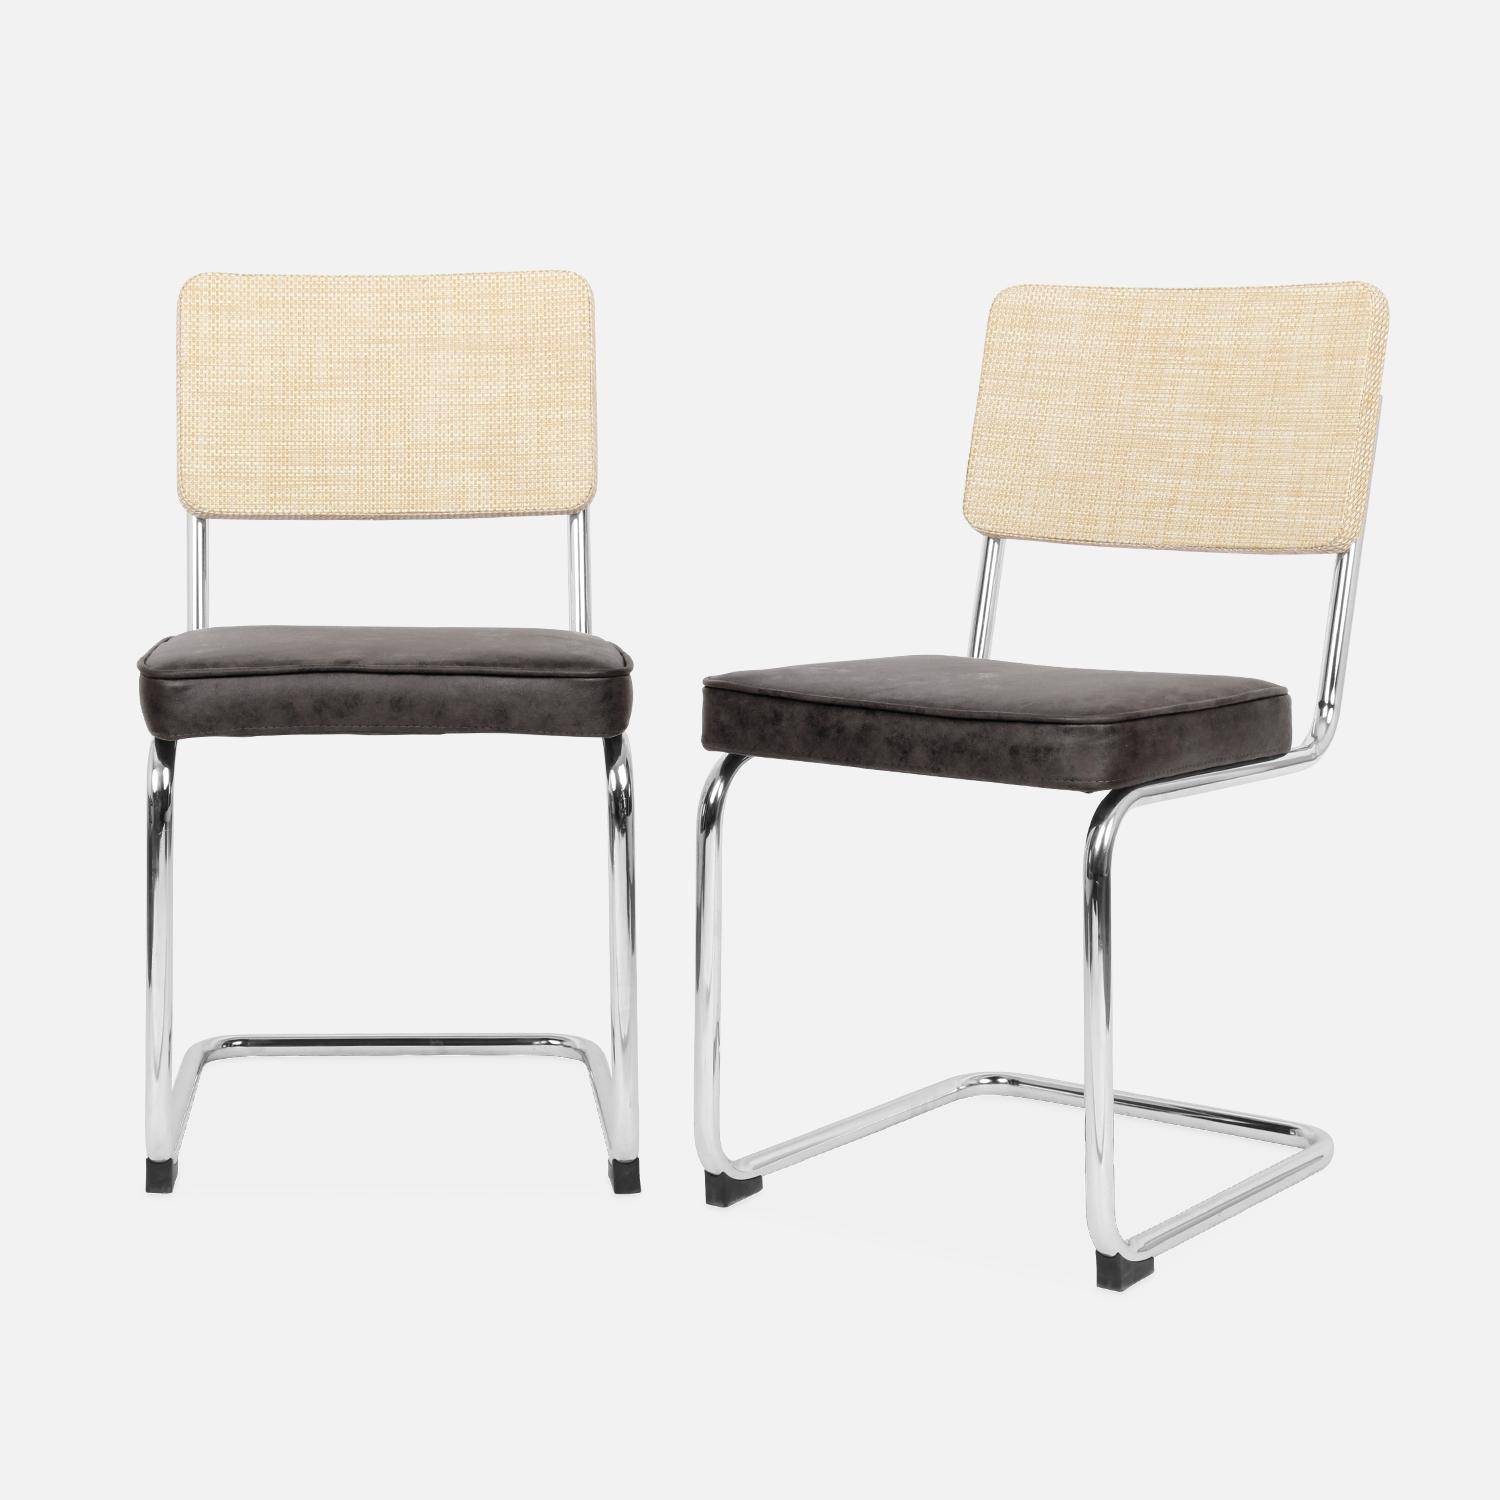 Pair of cantilever cane rattan dining chairs, 46x54.5x84.5cm - Maja - Black,sweeek,Photo4